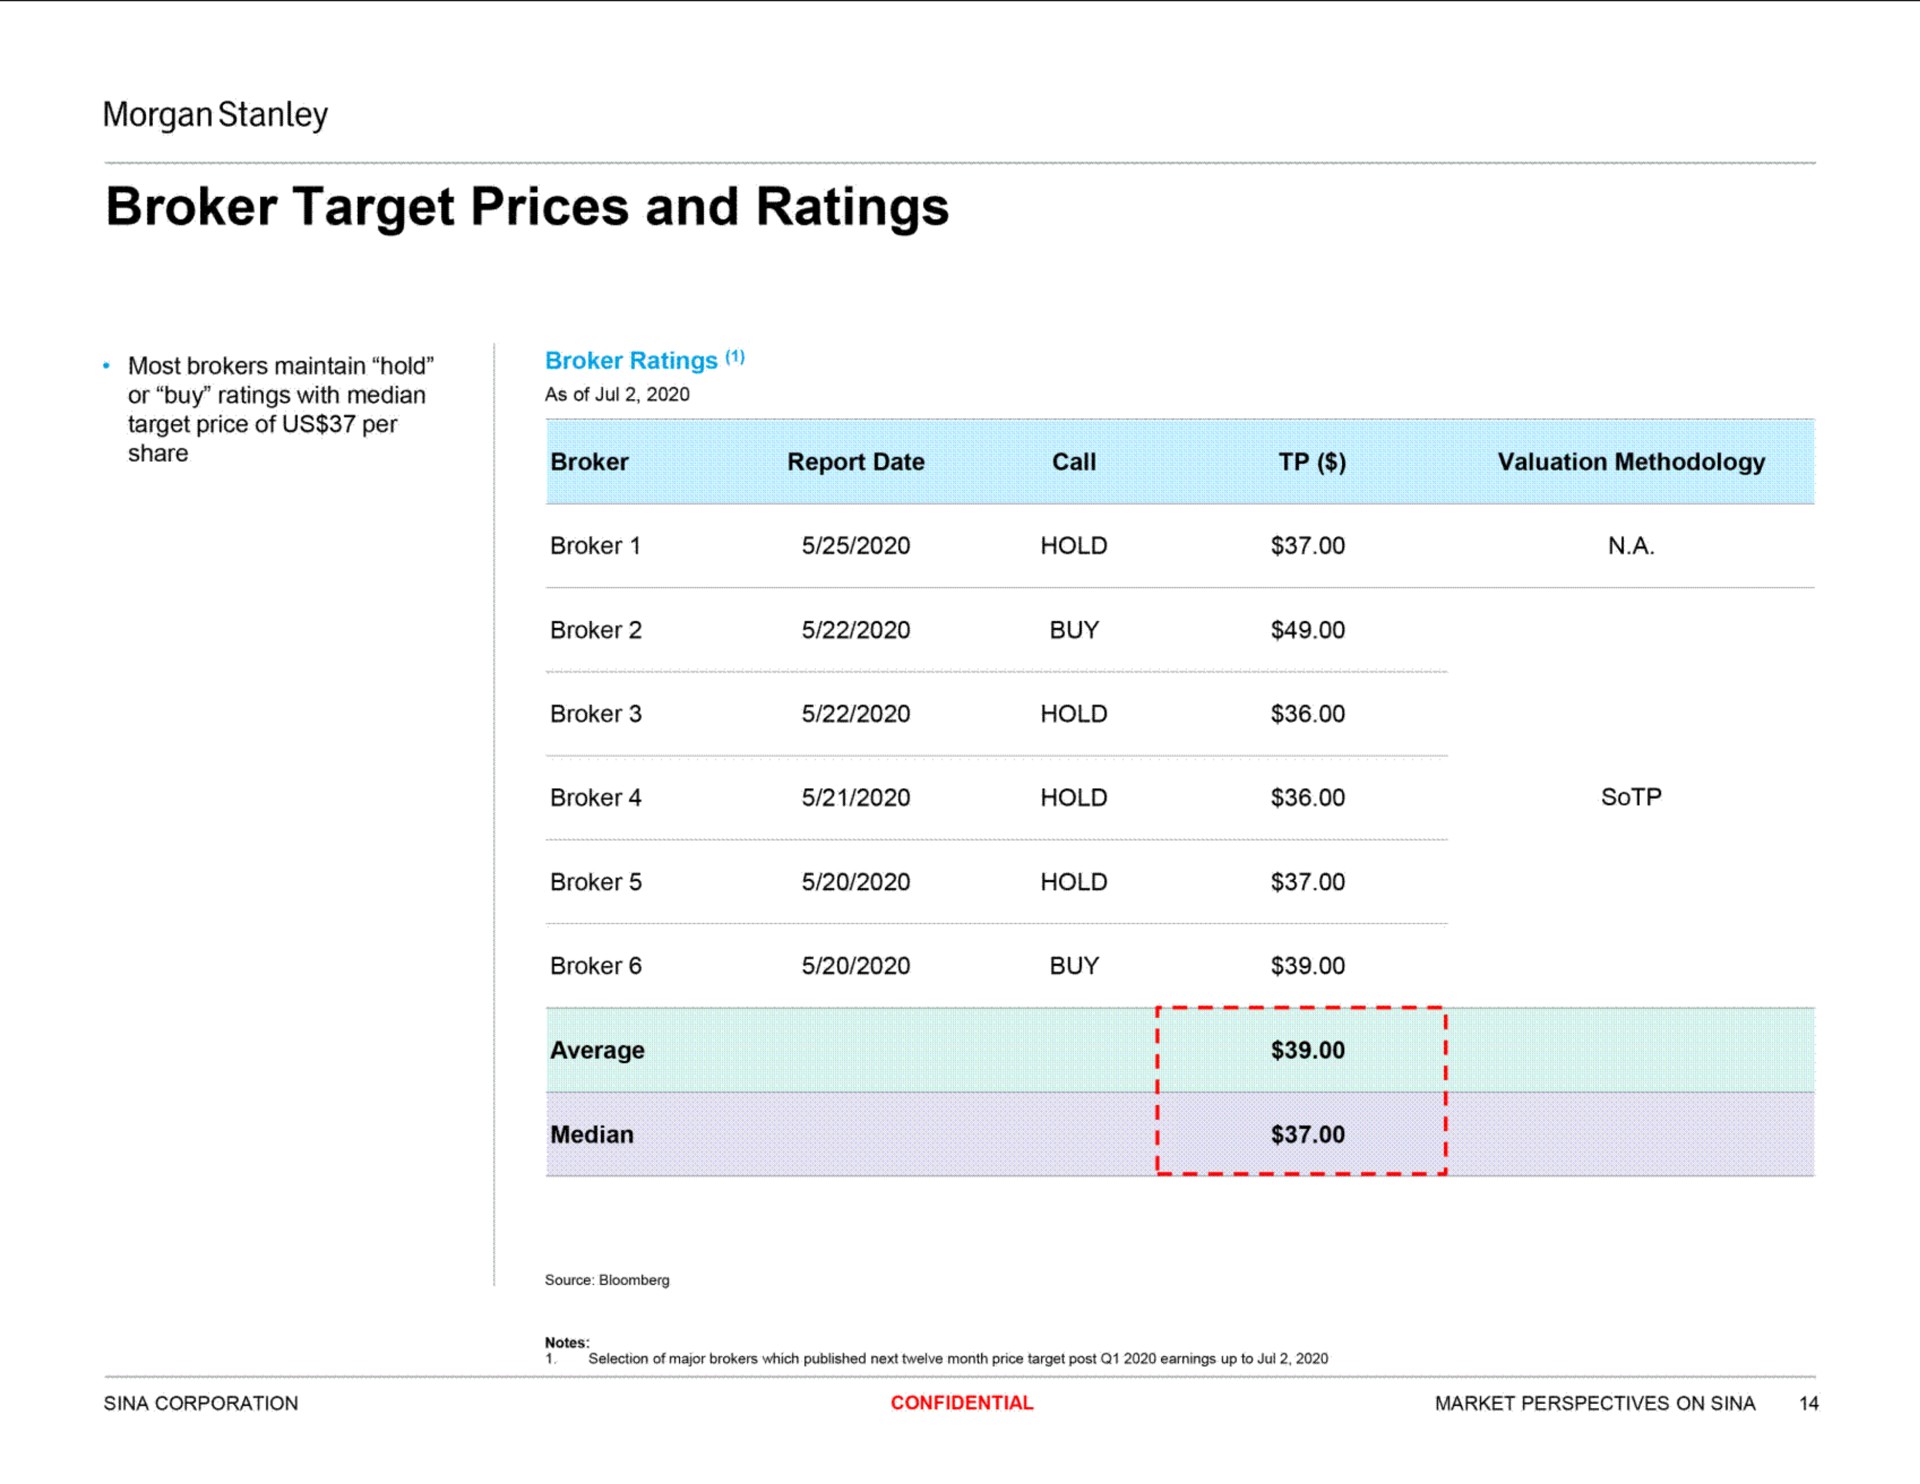 broker target prices and ratings | Morgan Stanley